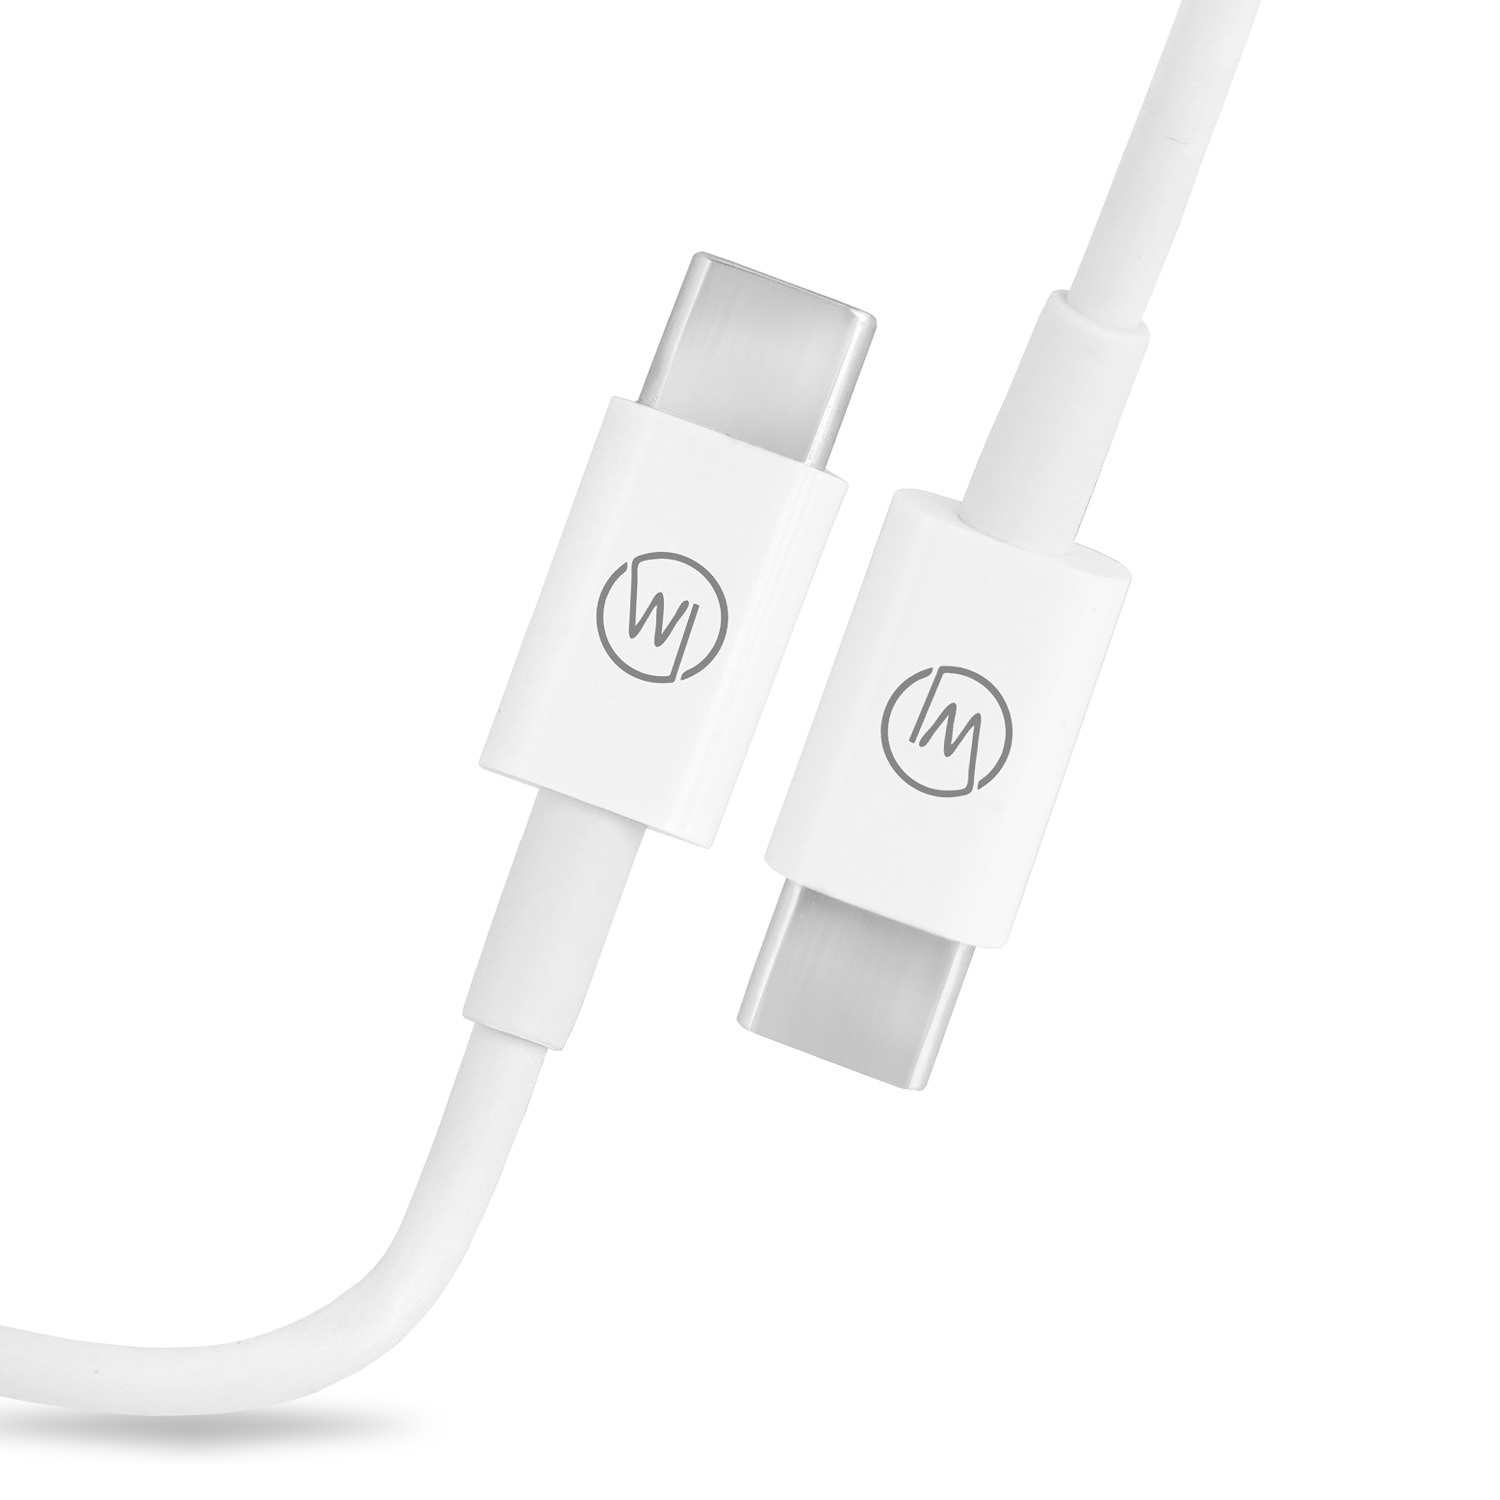 WICKED CHILI 3x USB auf / Kabel Ladekabel Charge Fast Air, (1m 1 Ladekabel, und USB-C 20V iPad MacBook / / Pro weiss C für m, 3A 60W)